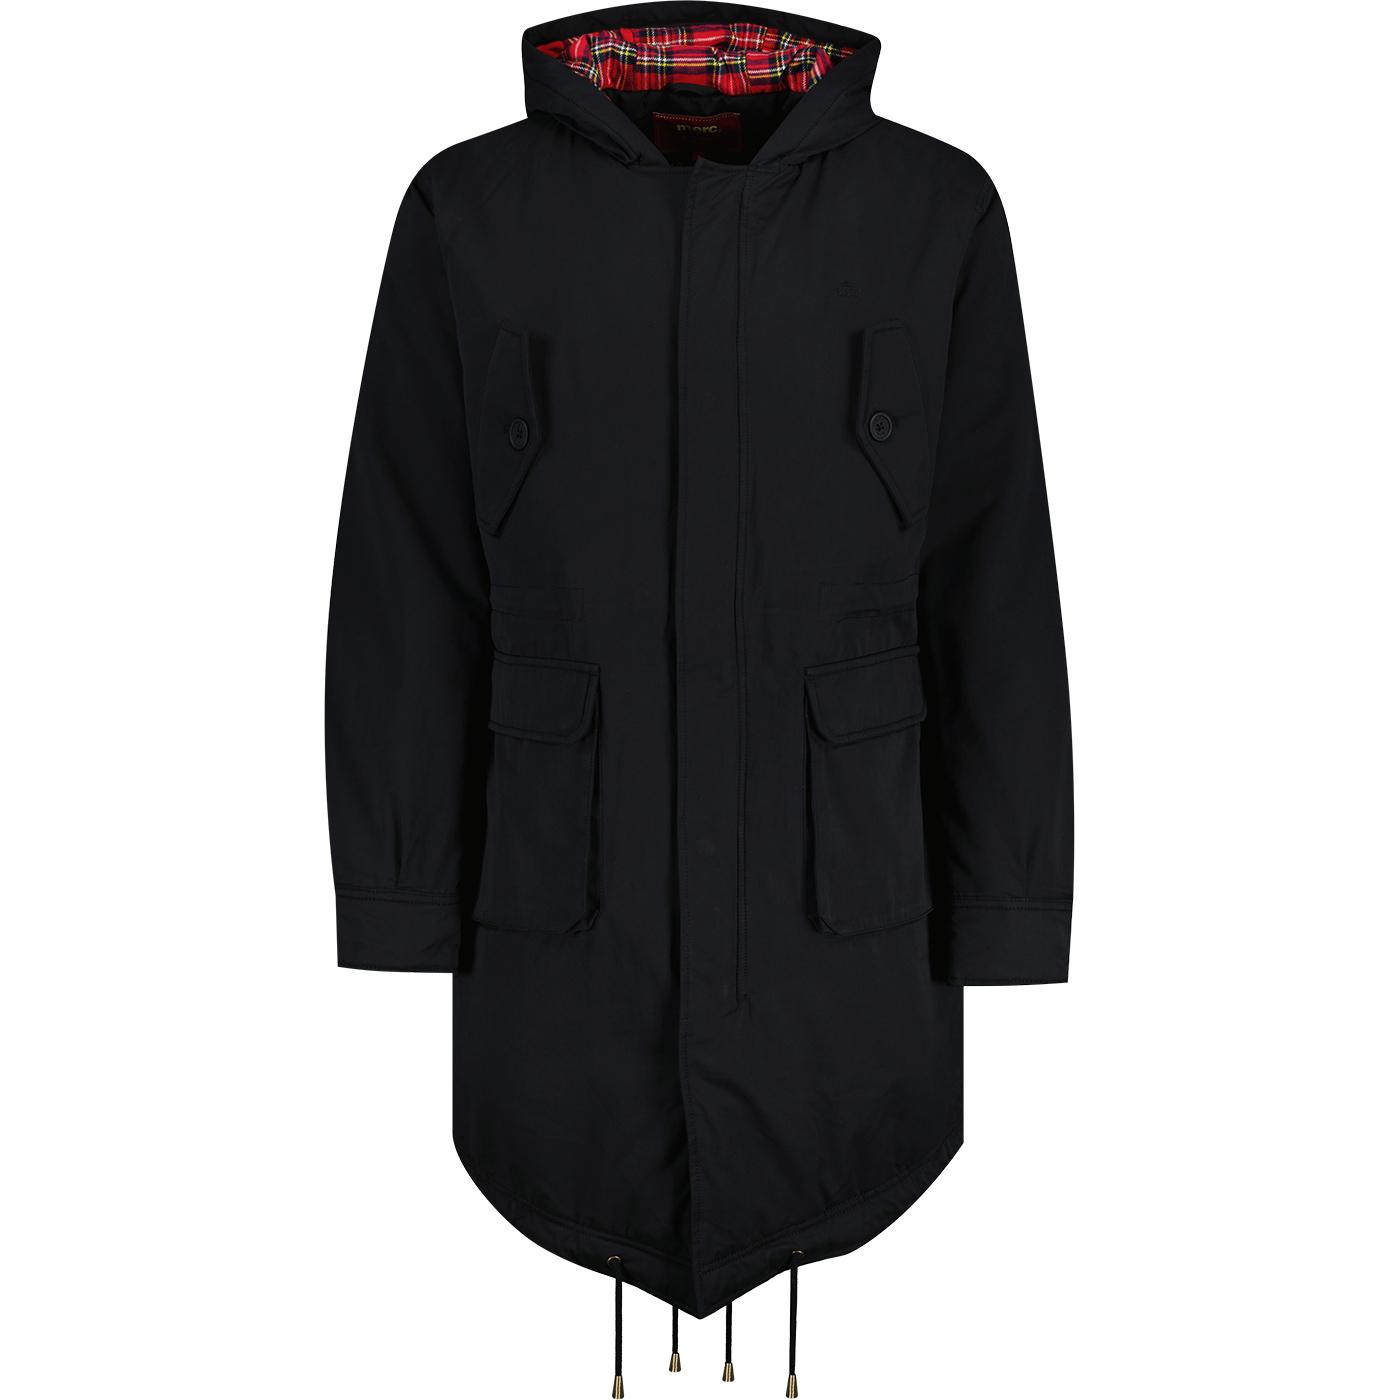 MERC Tobias Retro Sixties Mod Fishtail Parka Coat in Black